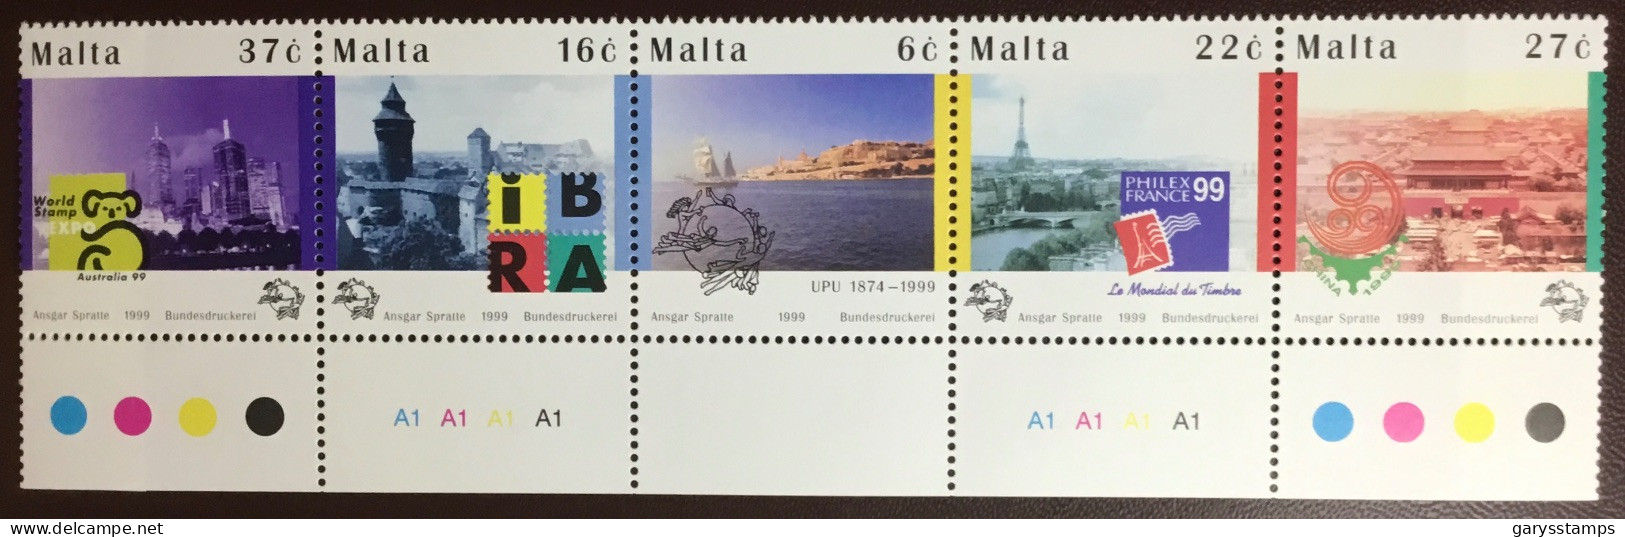 Malta 1999 Stamp Exhibitions UPU MNH - Malte